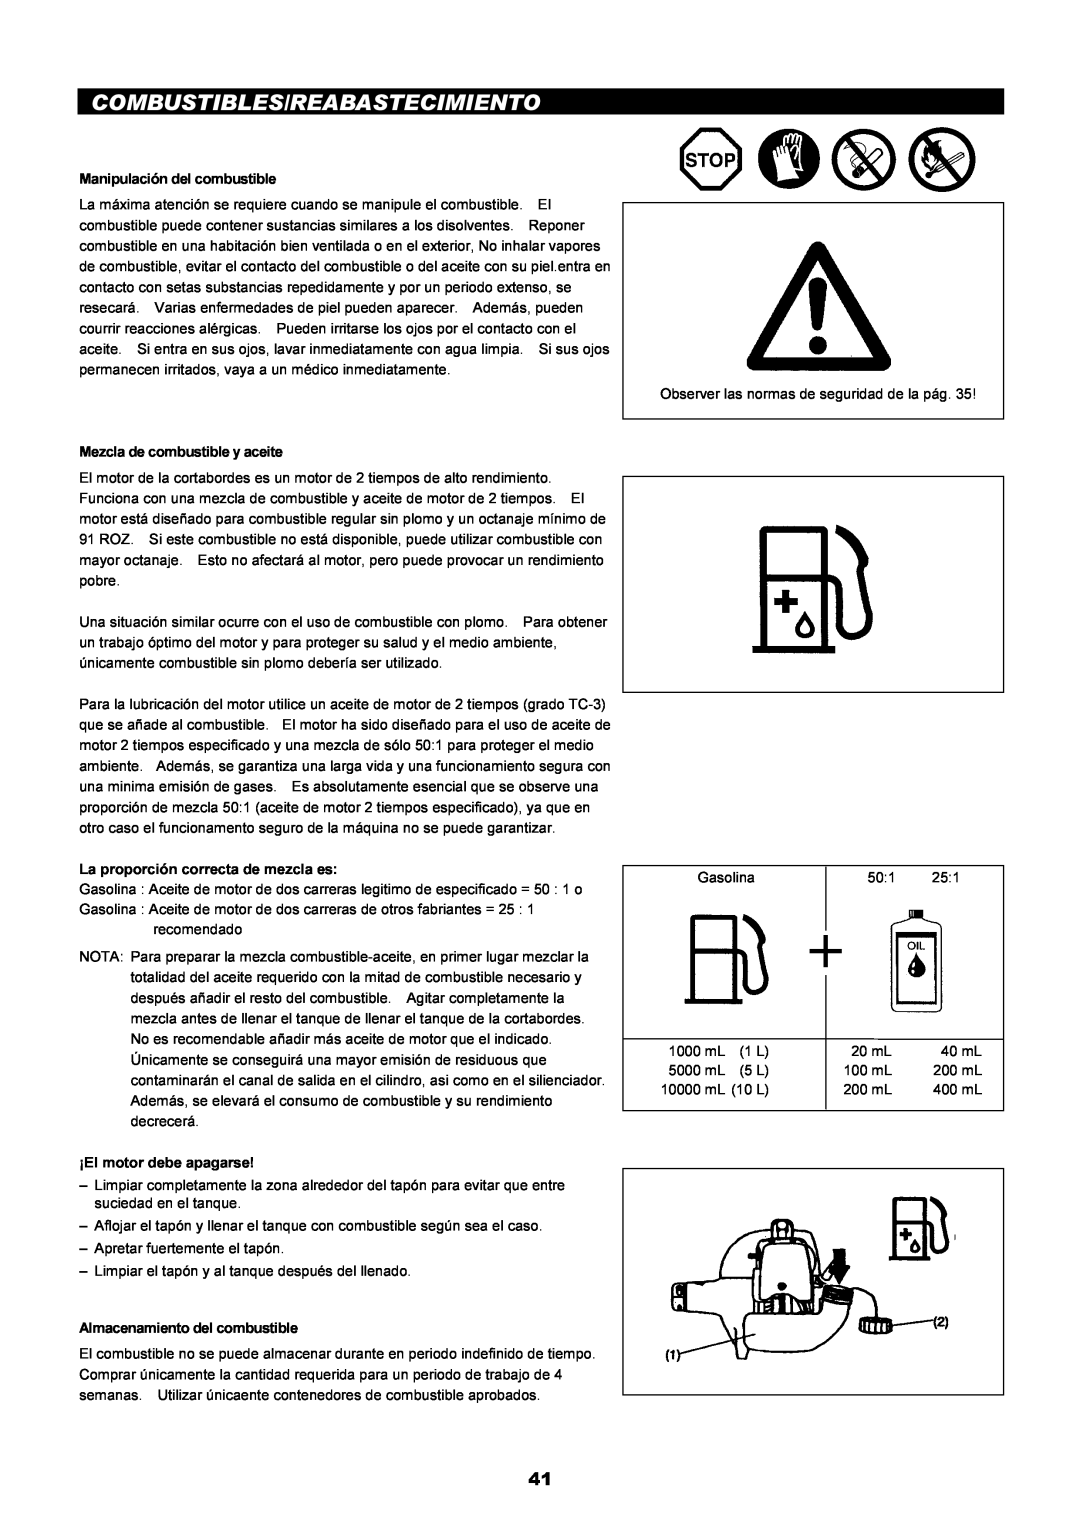 Dolmar PE-251 instruction manual Combustibles/Reabastecimiento 